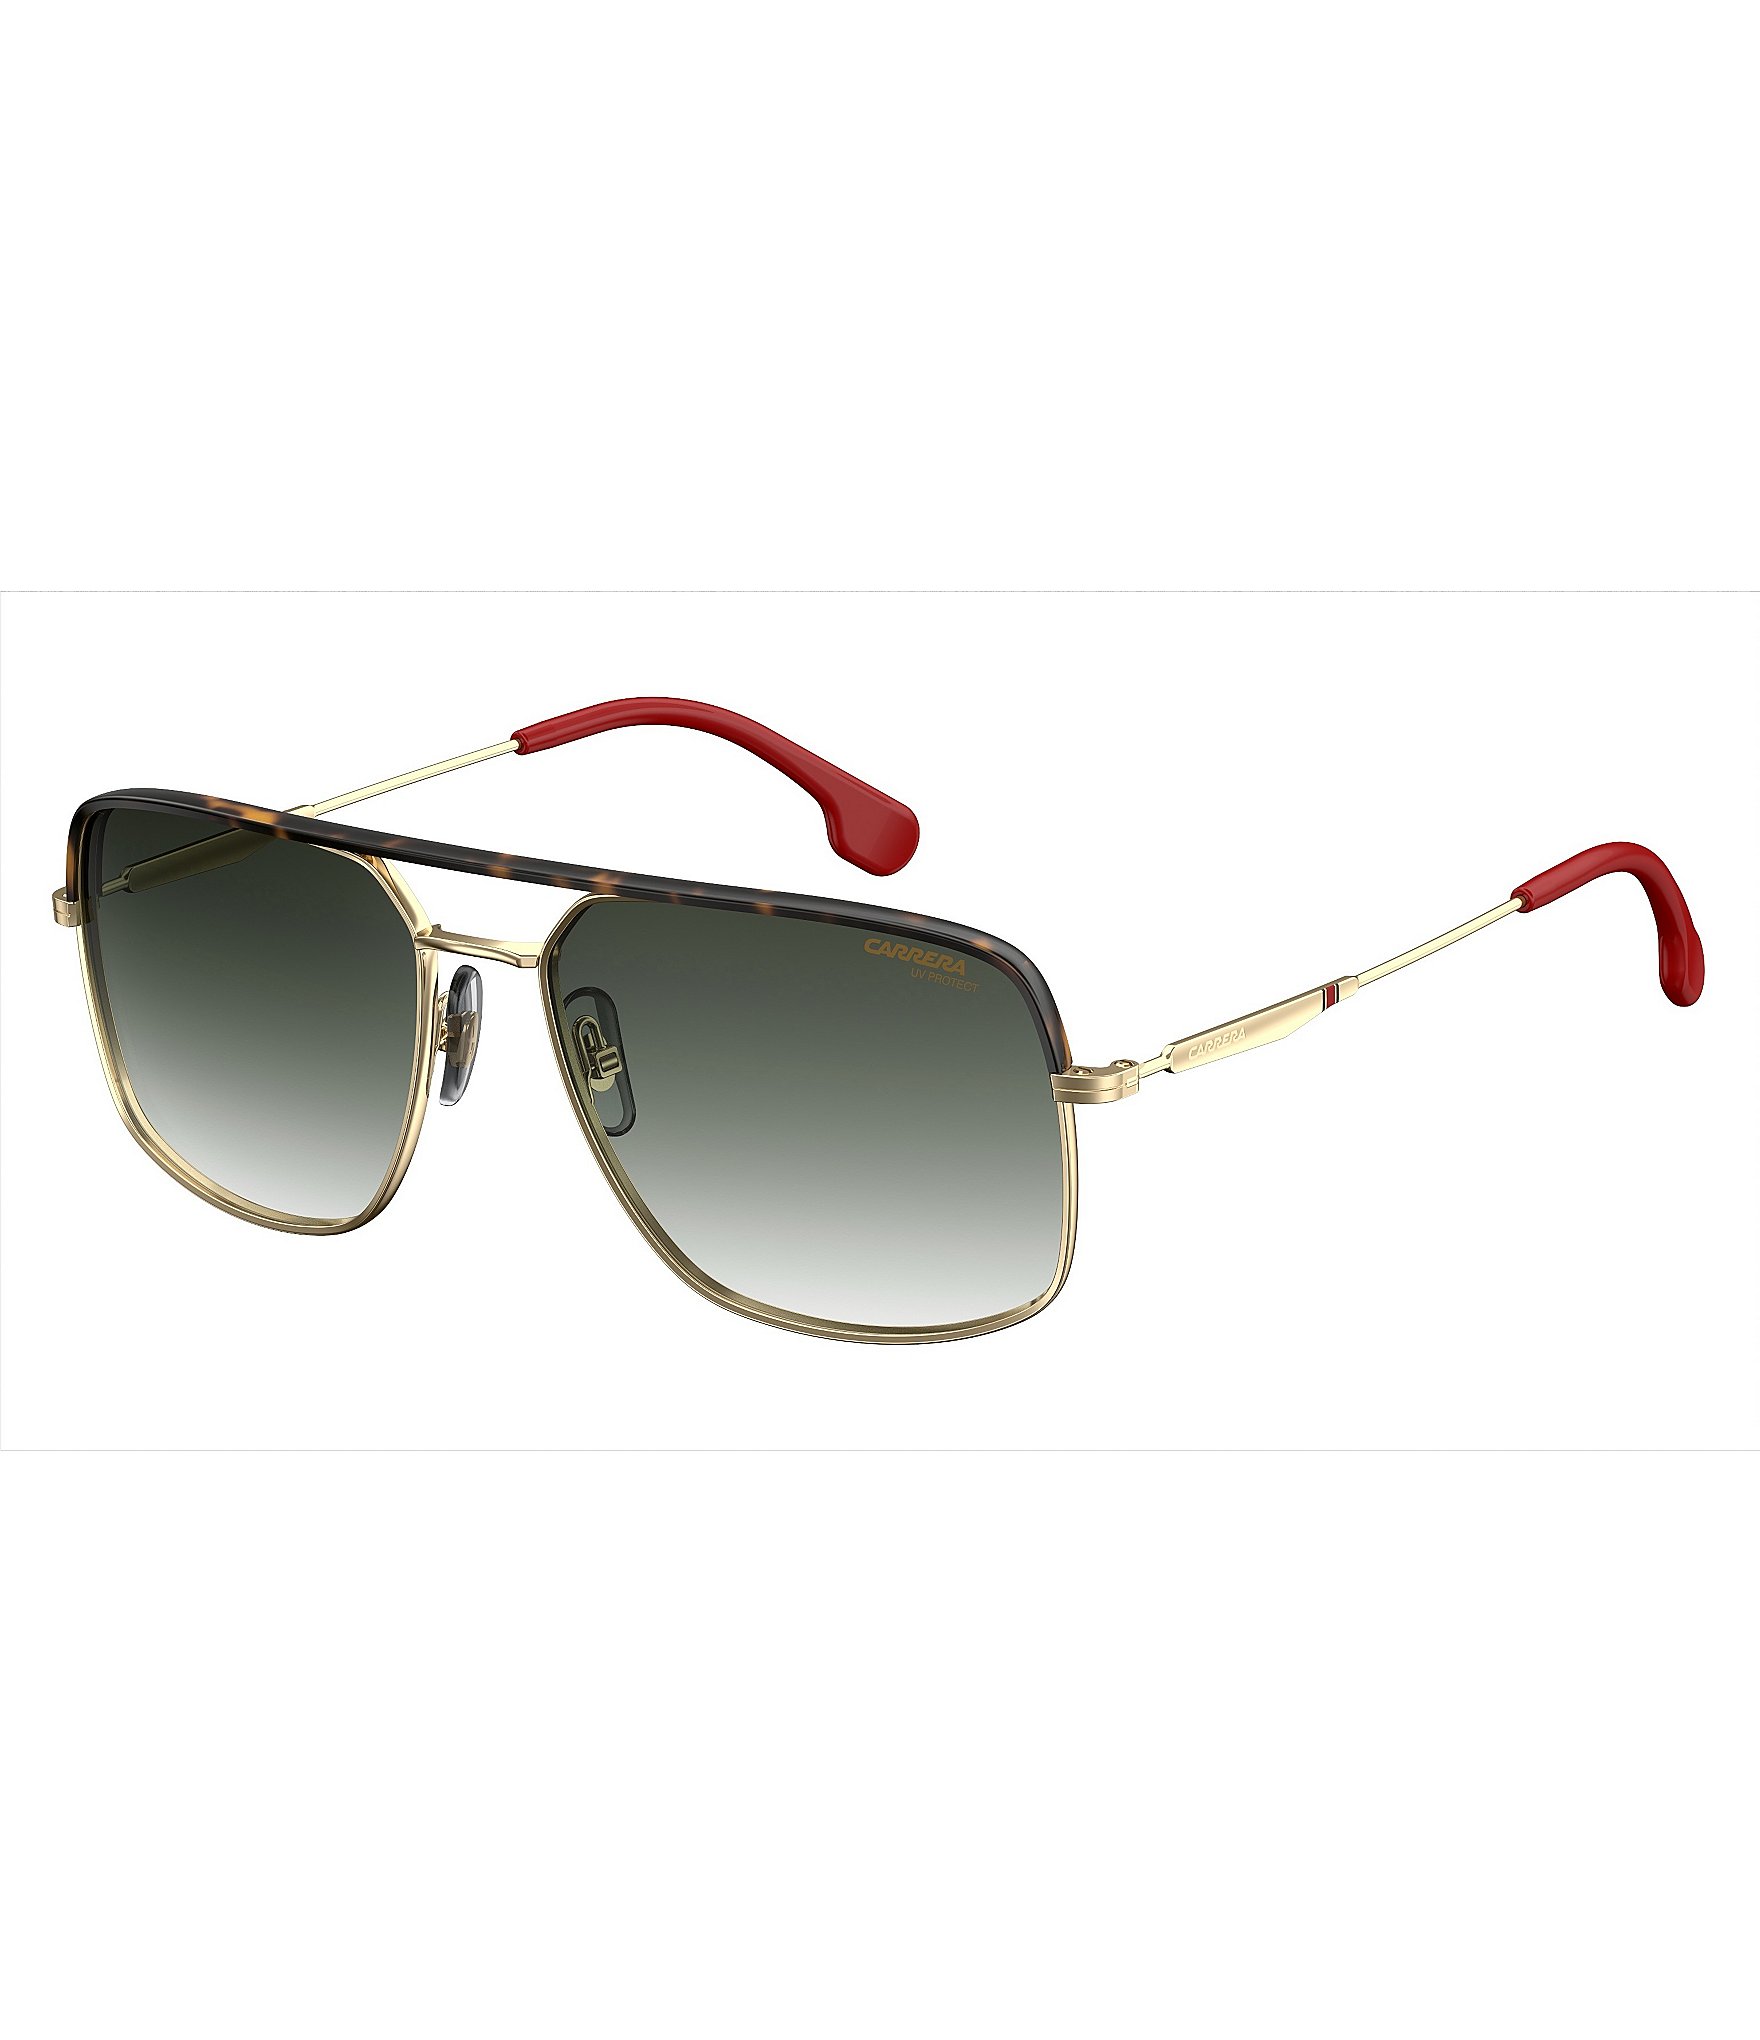 Carrera Gold Sunglasses & Eyewear for Men and Women | Dillard's